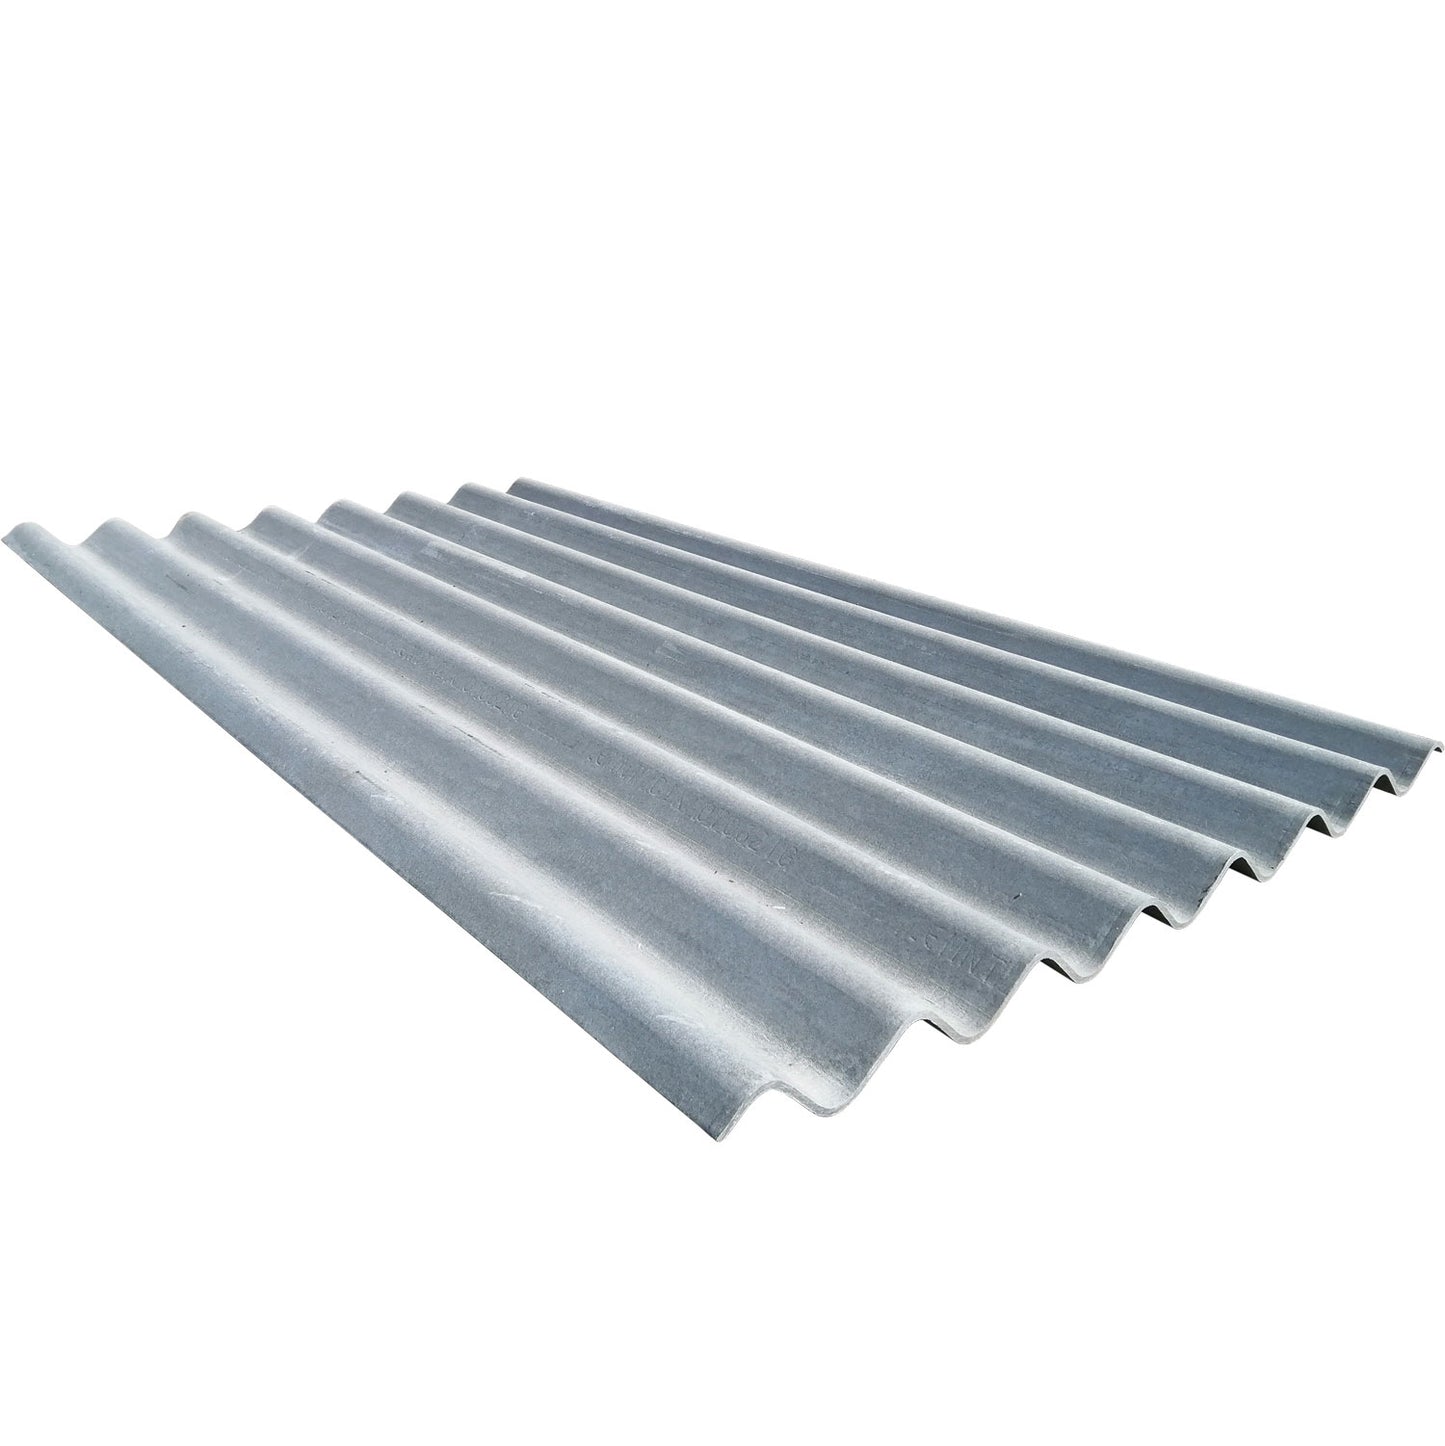 Big 6 Profile Fibre Cement Roof Sheets